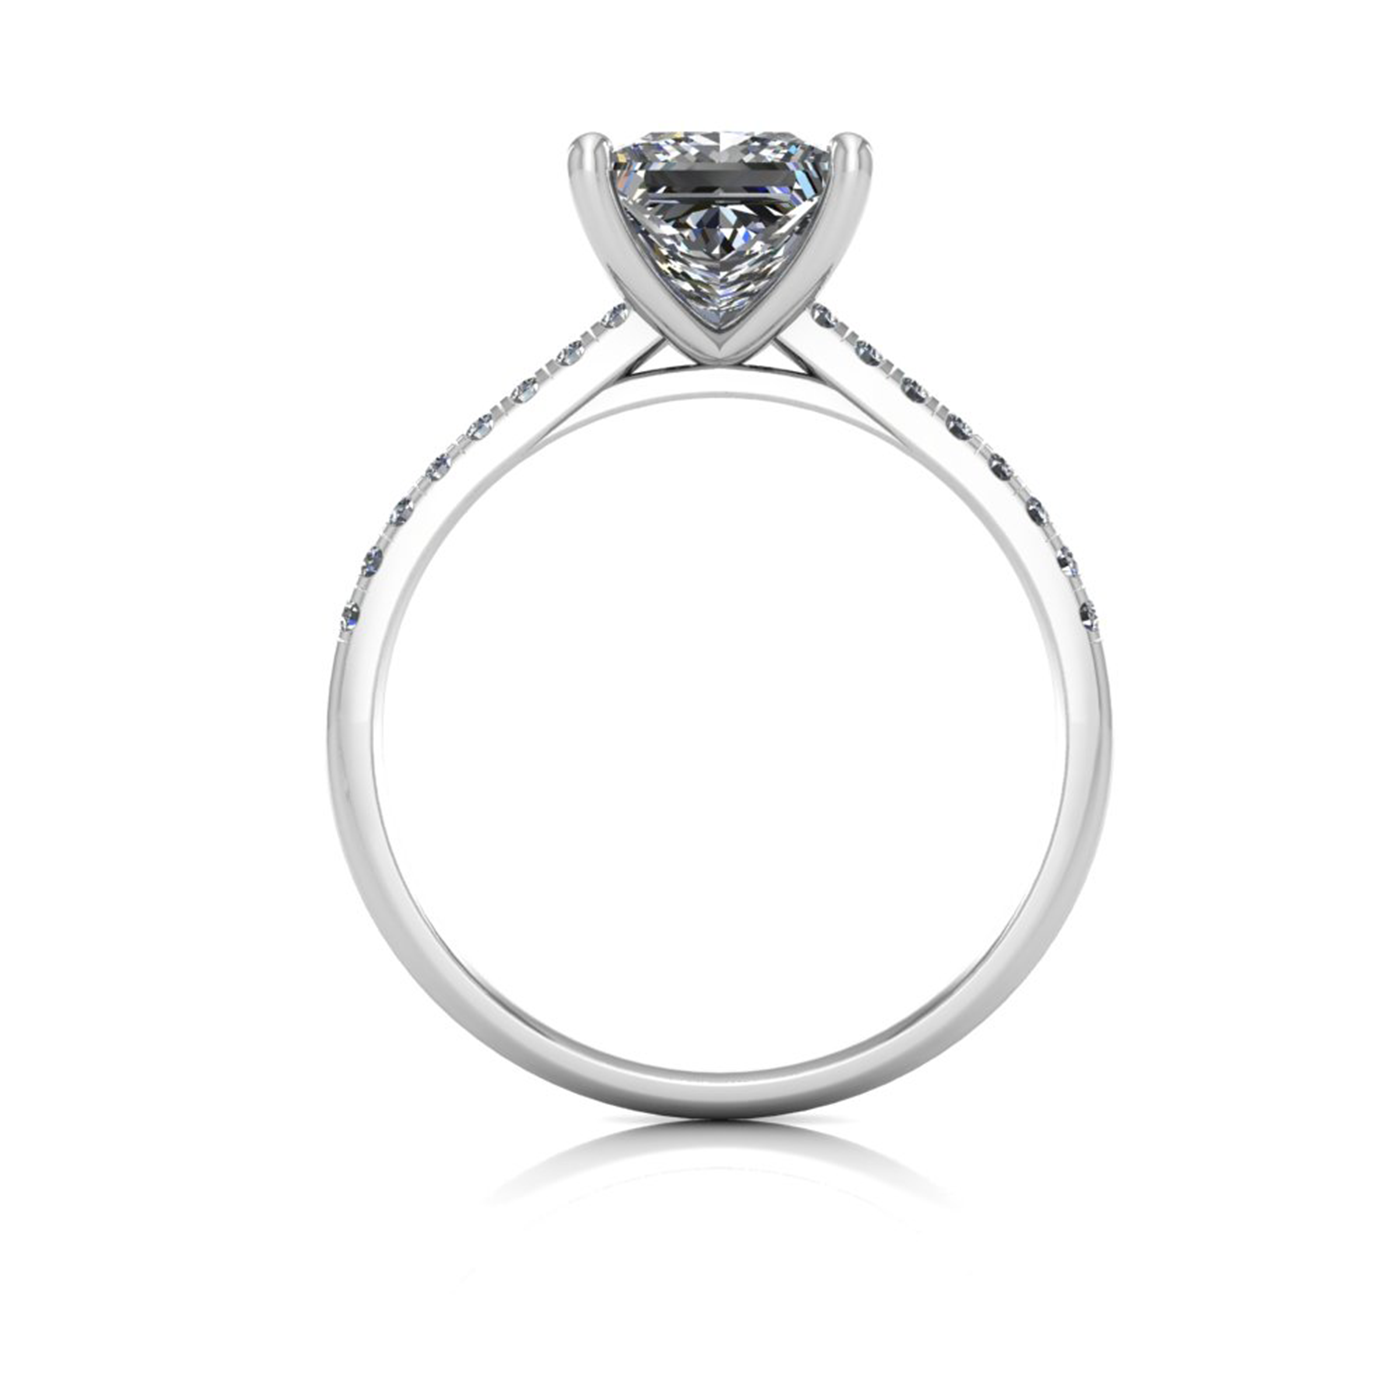 18k white gold 1,50 ct 4 prongs princess cut diamond engagement ring with whisper thin pavÉ set band